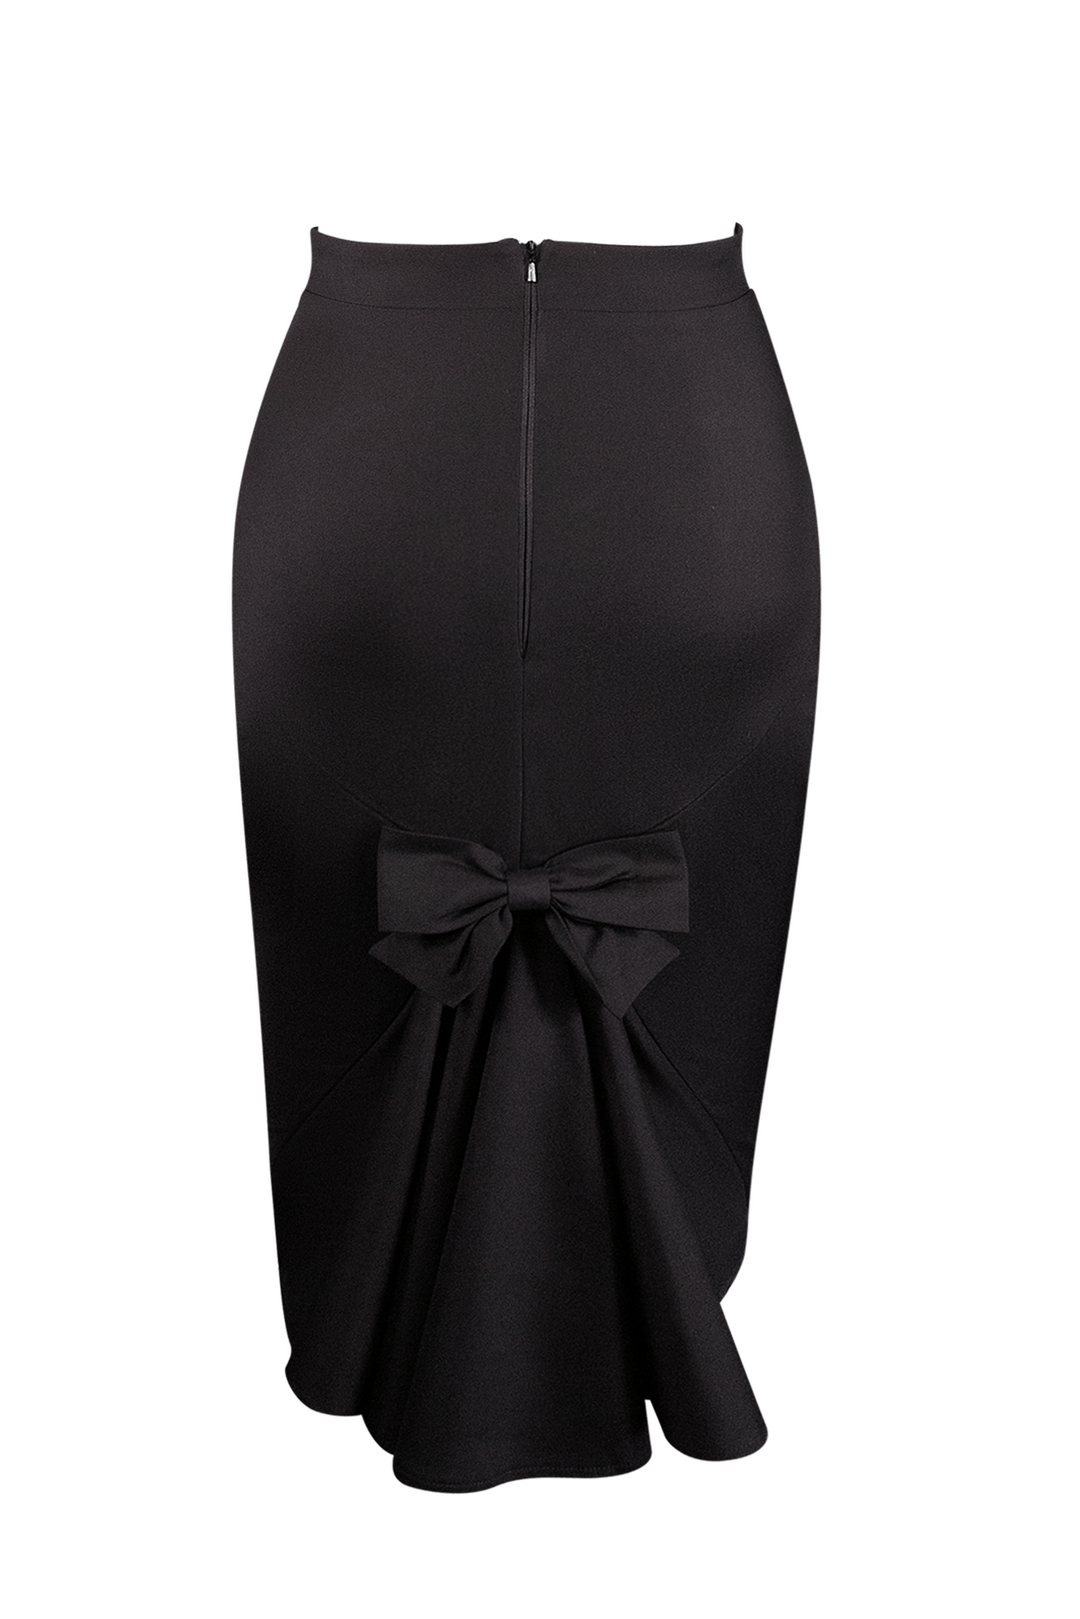 Heiress Wiggle Skirt (Black) - Kitten D'Amour